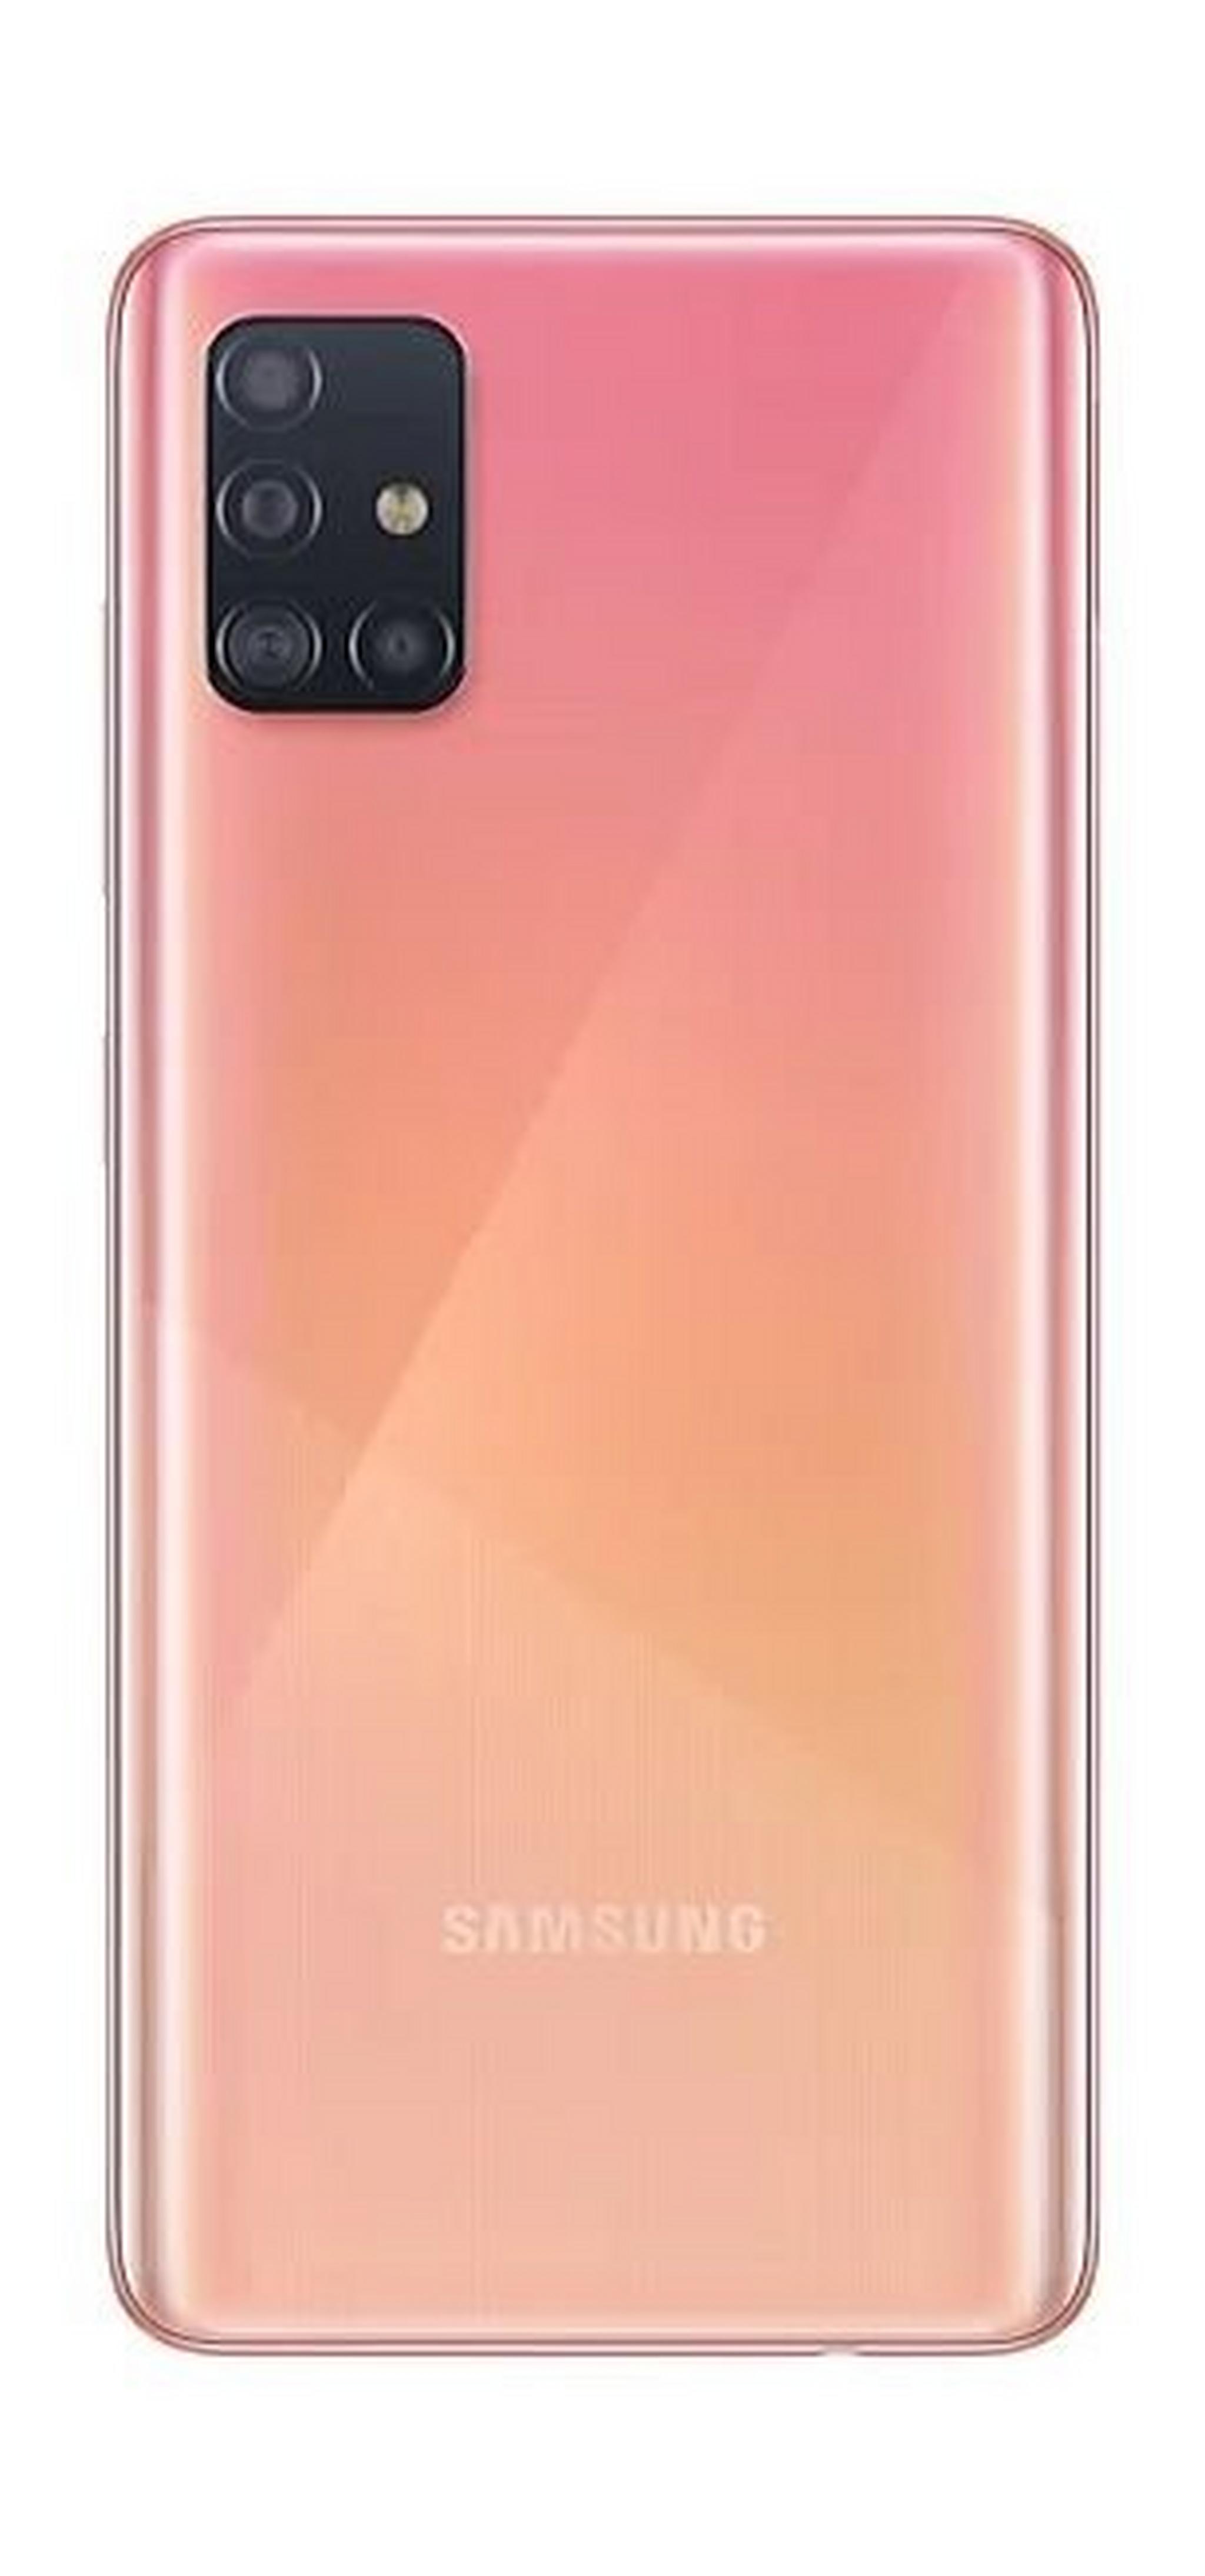 Samsung Galaxy A51 128GB Phone - Pink